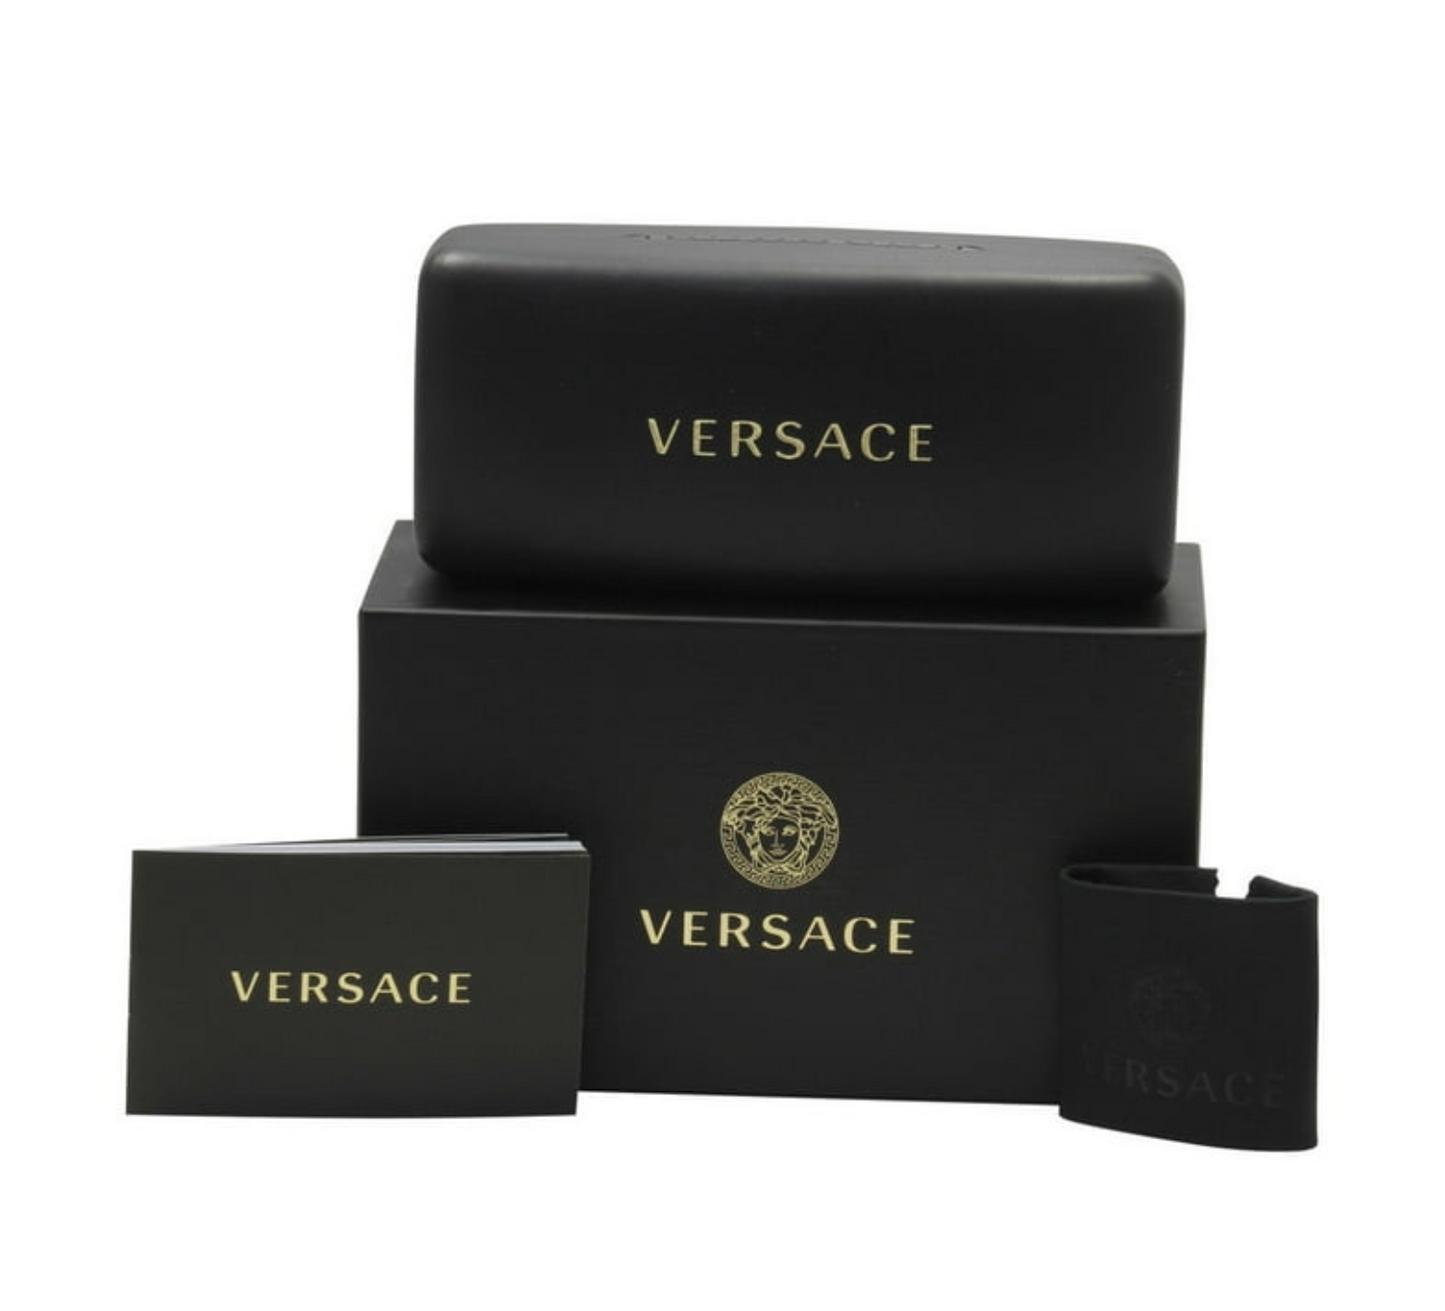 Versace VE4425U-544087-54 54mm New Sunglasses